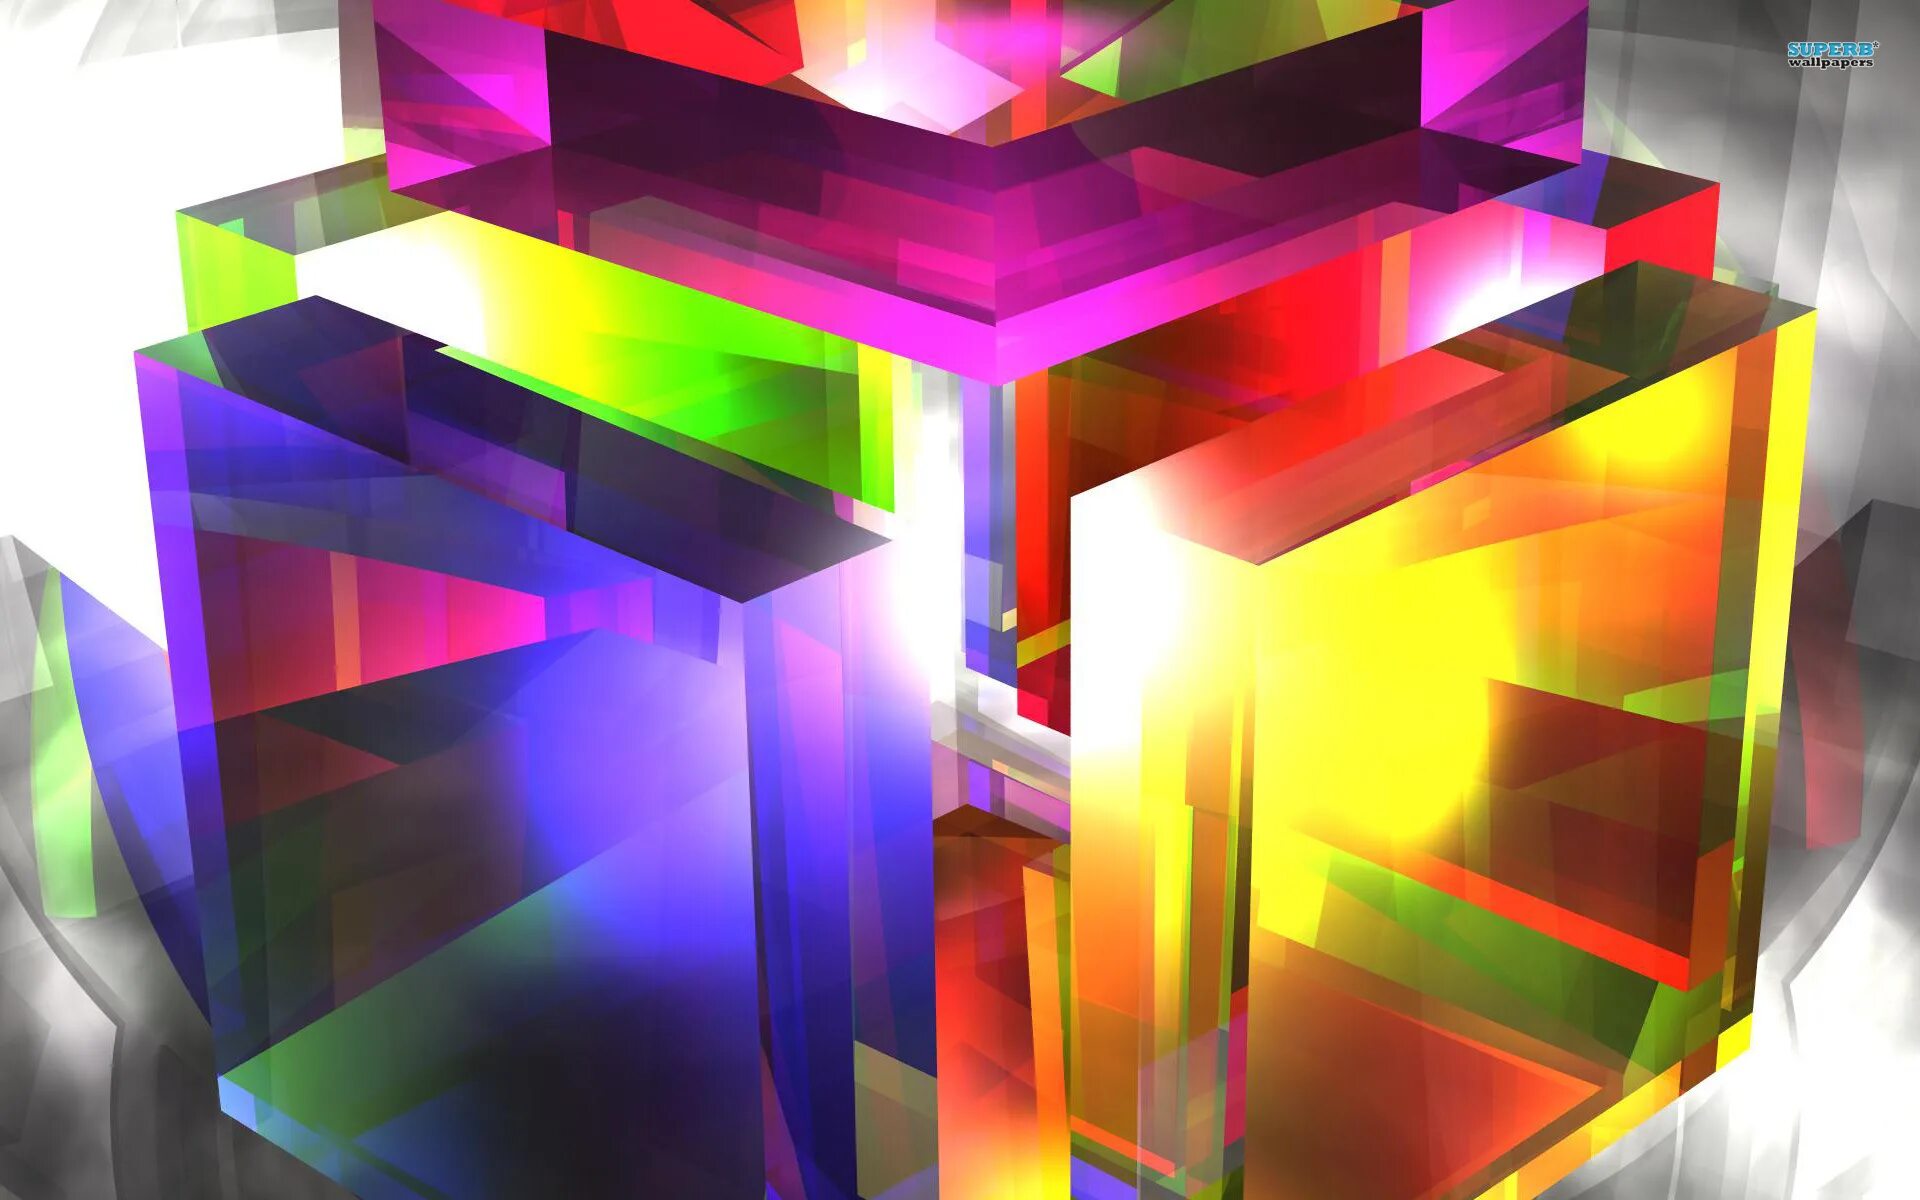 3д cube. Стеклянный разноцветный кубик. Разноцветные кубики. Цветные кубики 3д. Разноцветный куб.